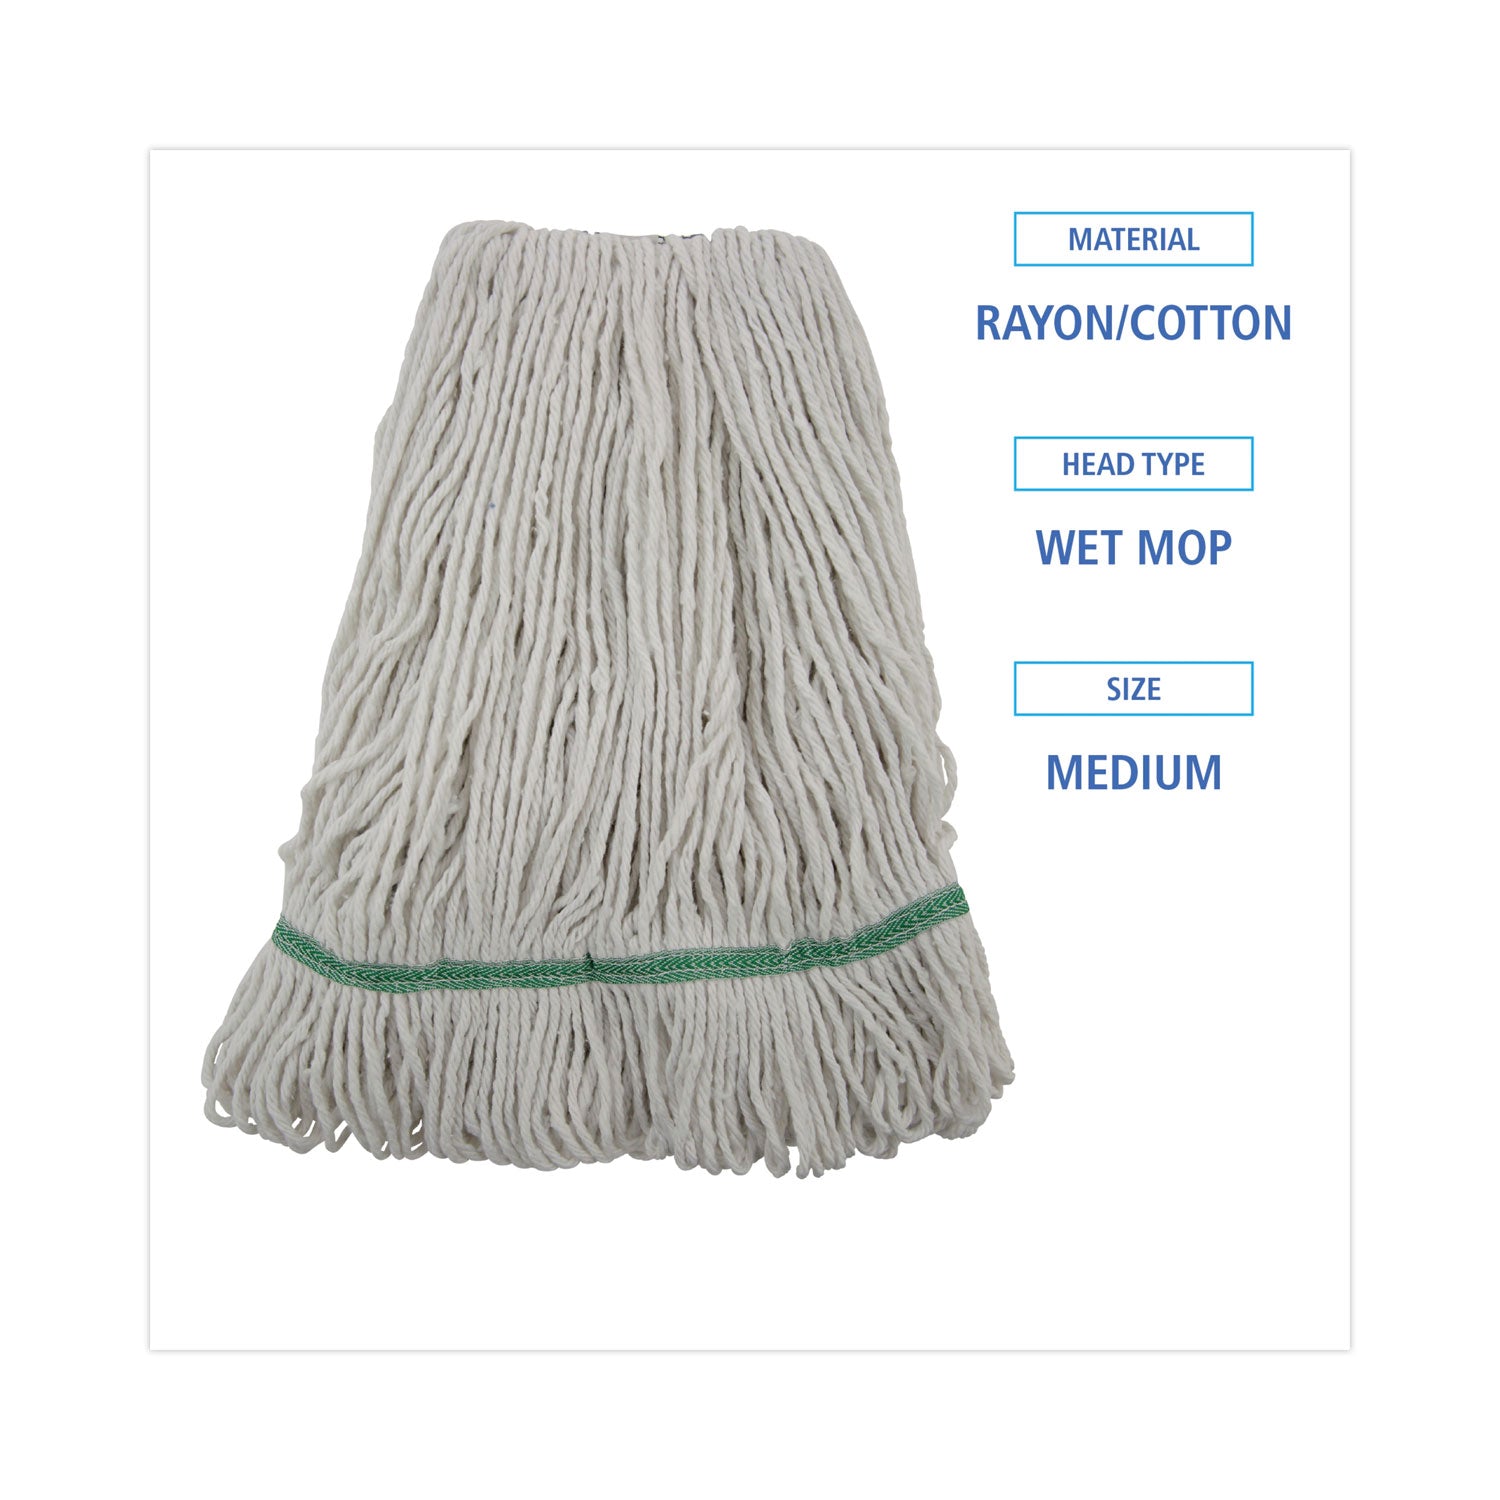 mop-head-premium-standard-head-cotton-rayon-fiber-medium-white_bwk502whnb - 2